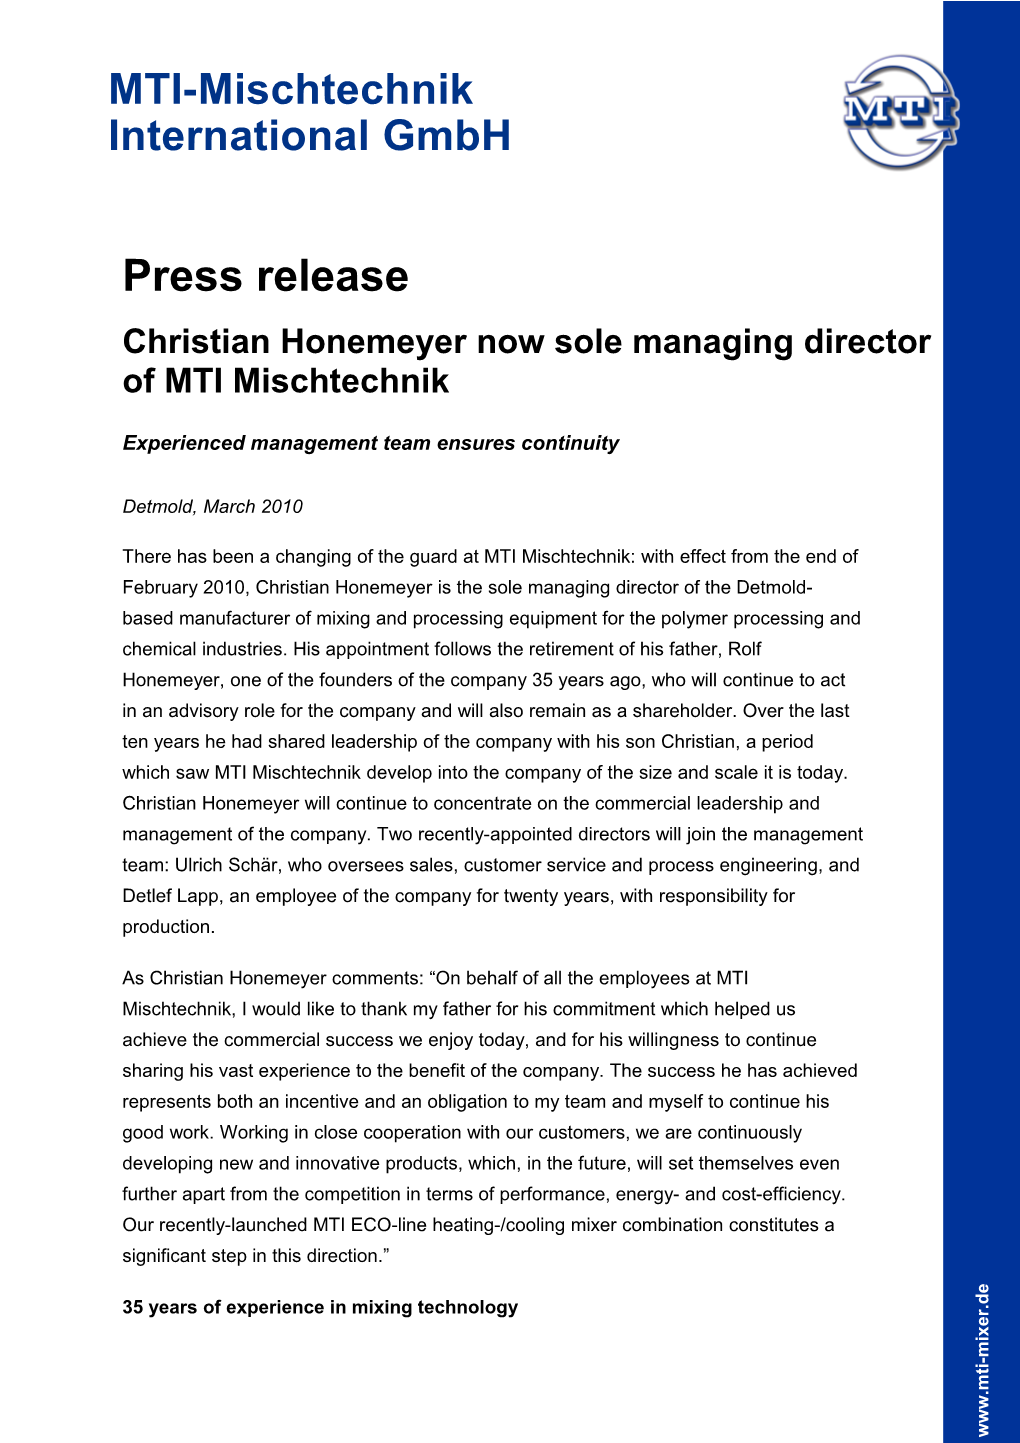 Christian Honemeyer Now Sole Managing Director of MTI Mischtechnik